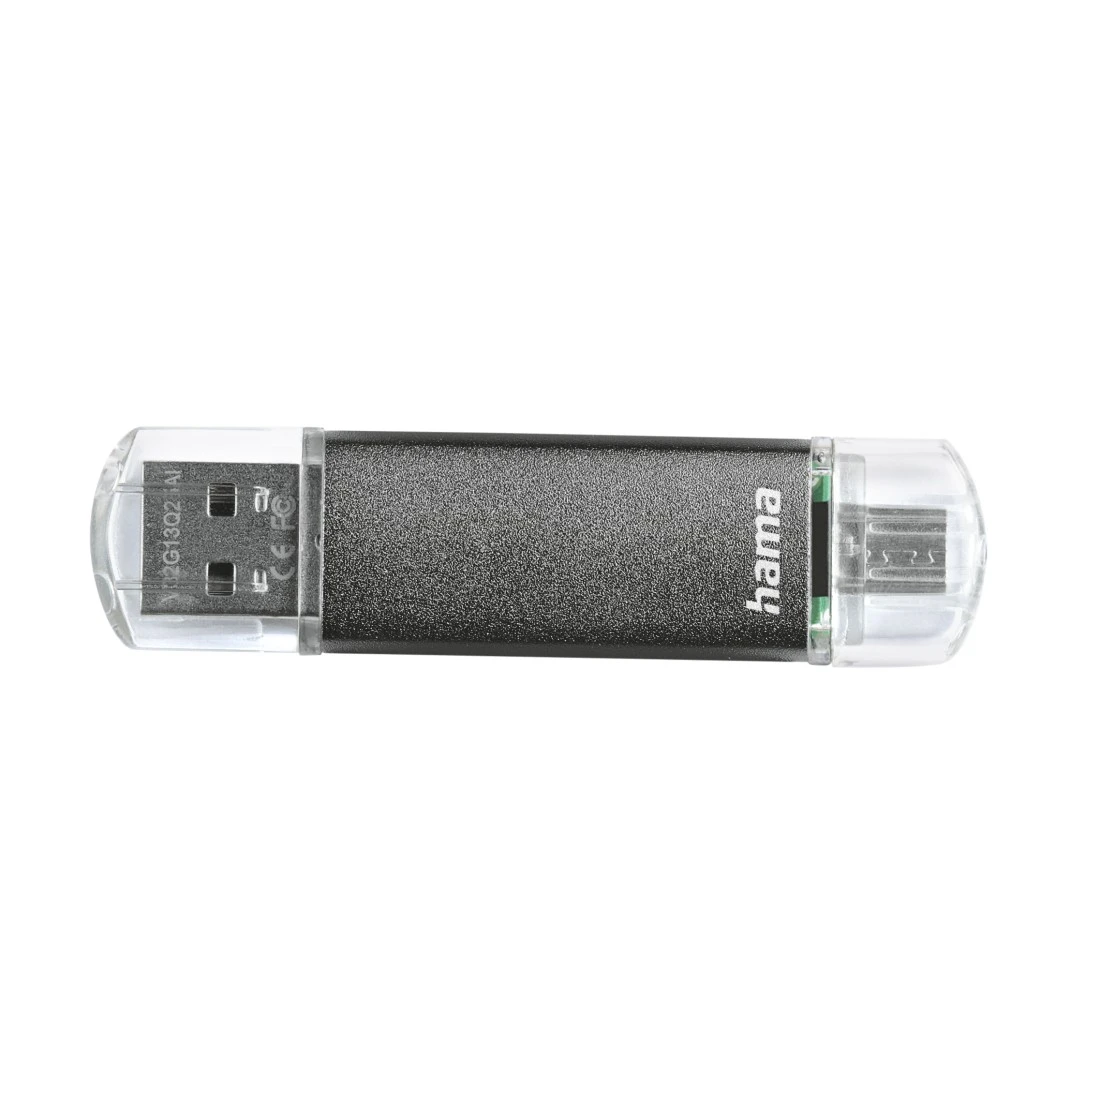 HAMA C-LAETA 32GB USB-C & A 3.1 USB STICK - Exlen, Chesterfield